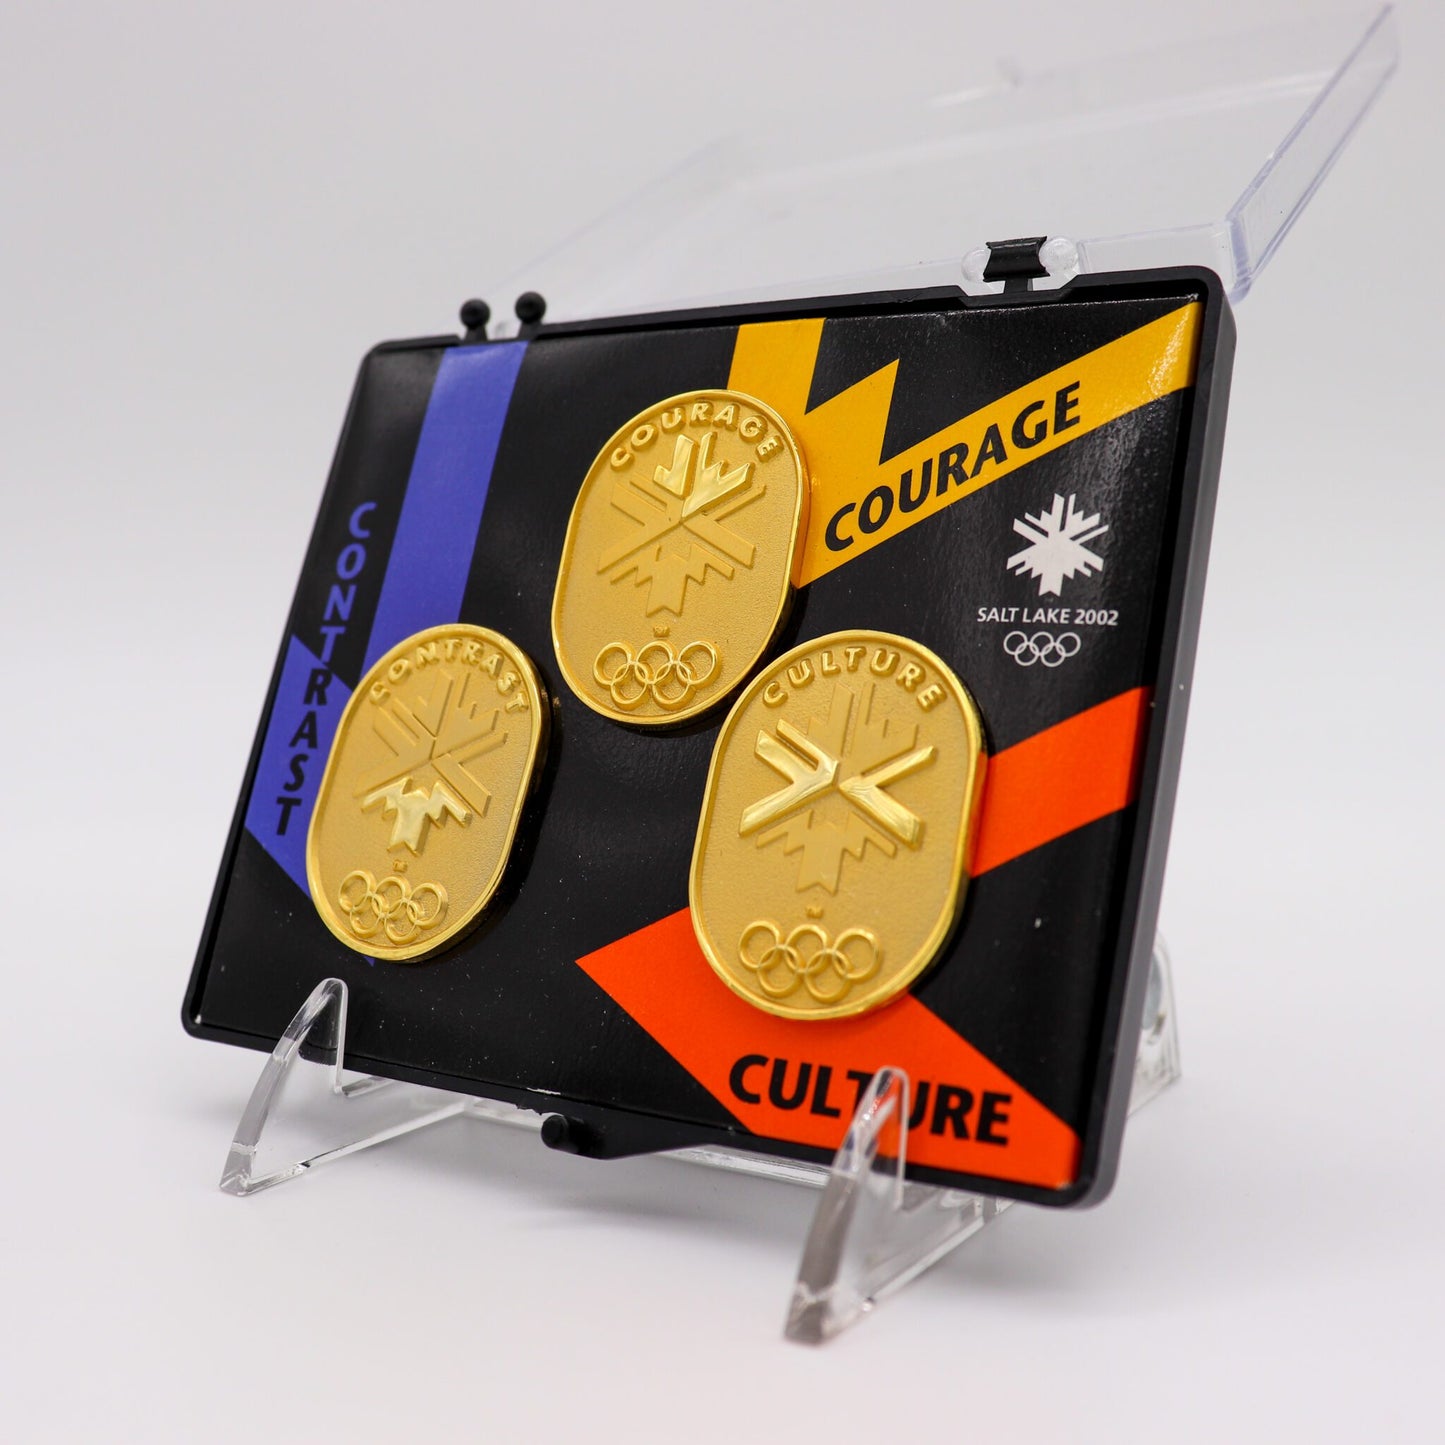 2002 Salt Lake City Winter Olympics Limited Edition Pin Set, Mint